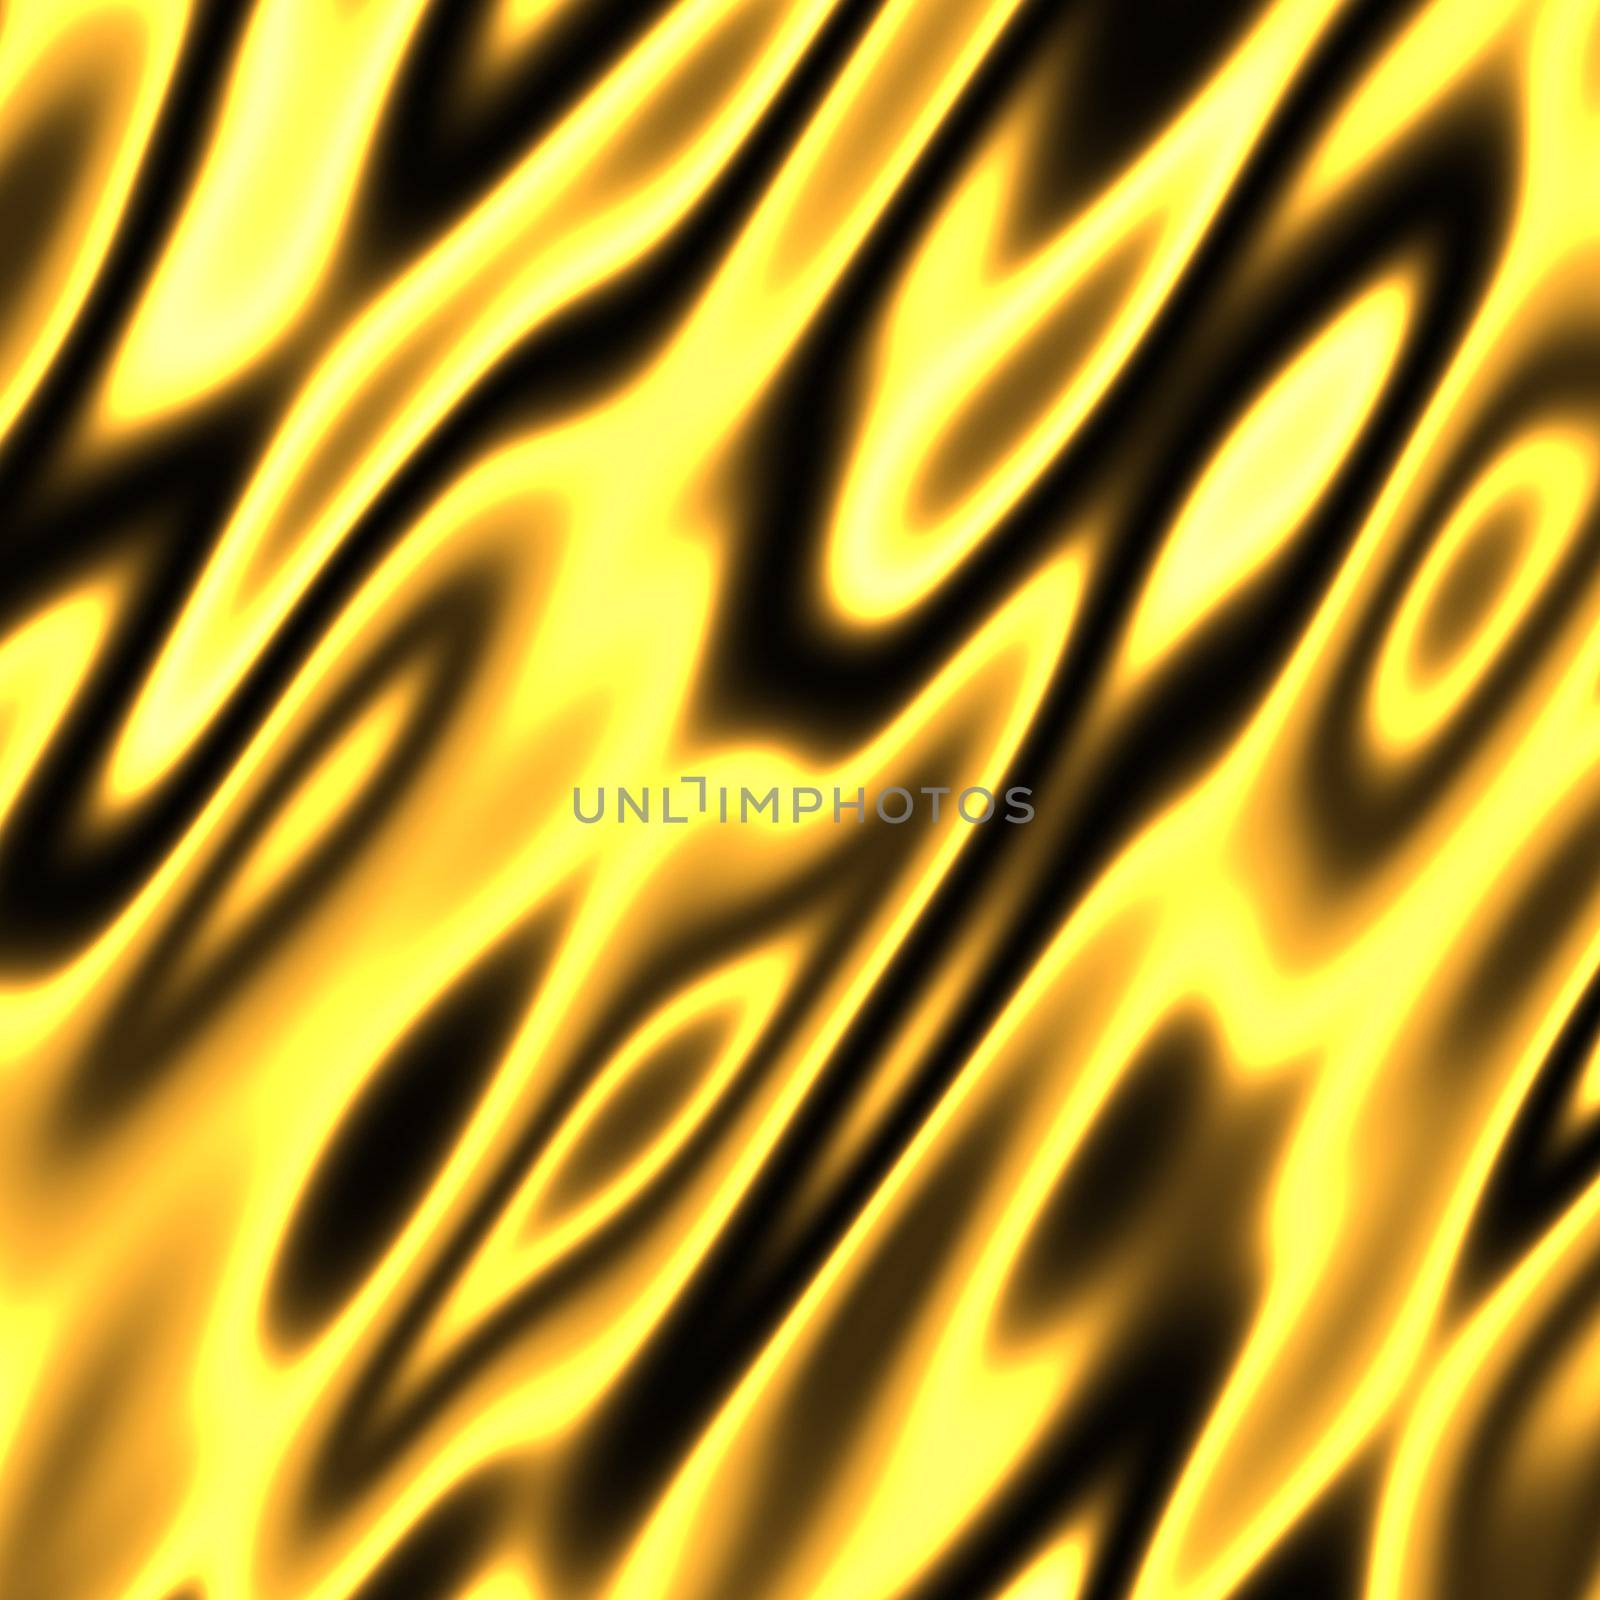 A golden flames background texture - very hot.